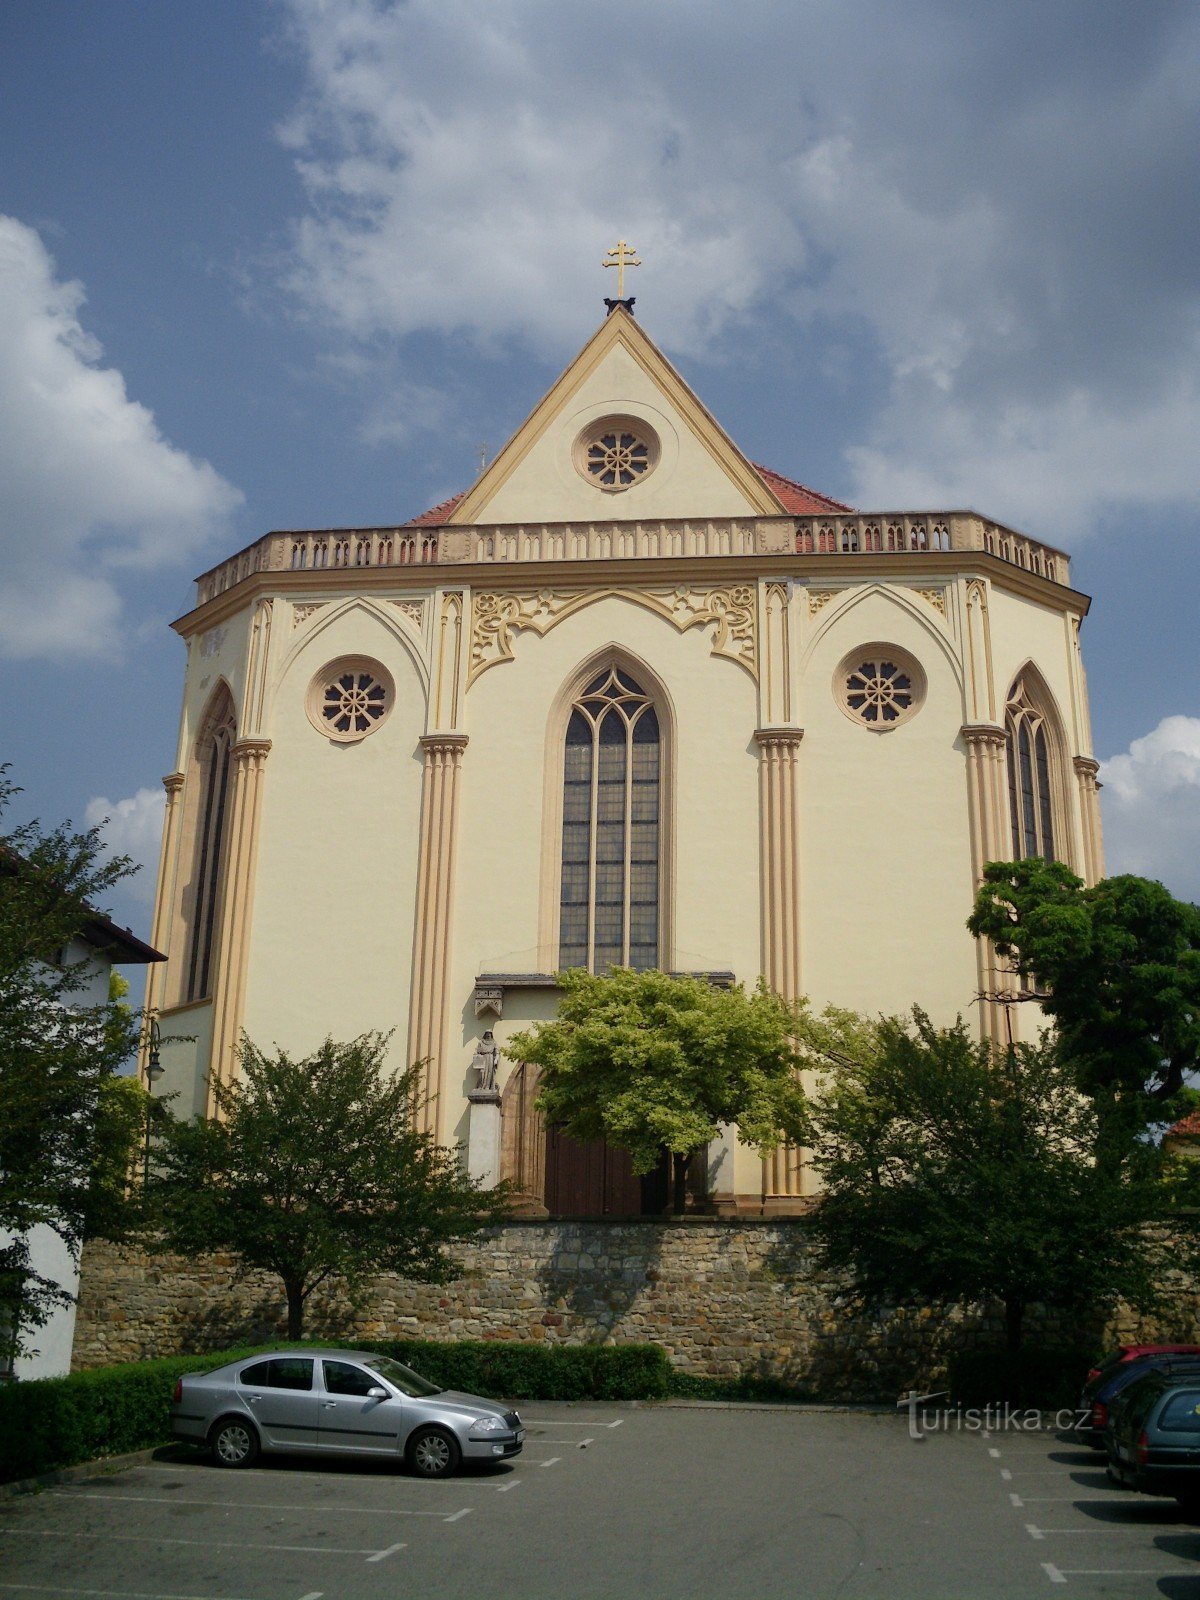 Boskovice - de kerk van St. Jakub de Oudere